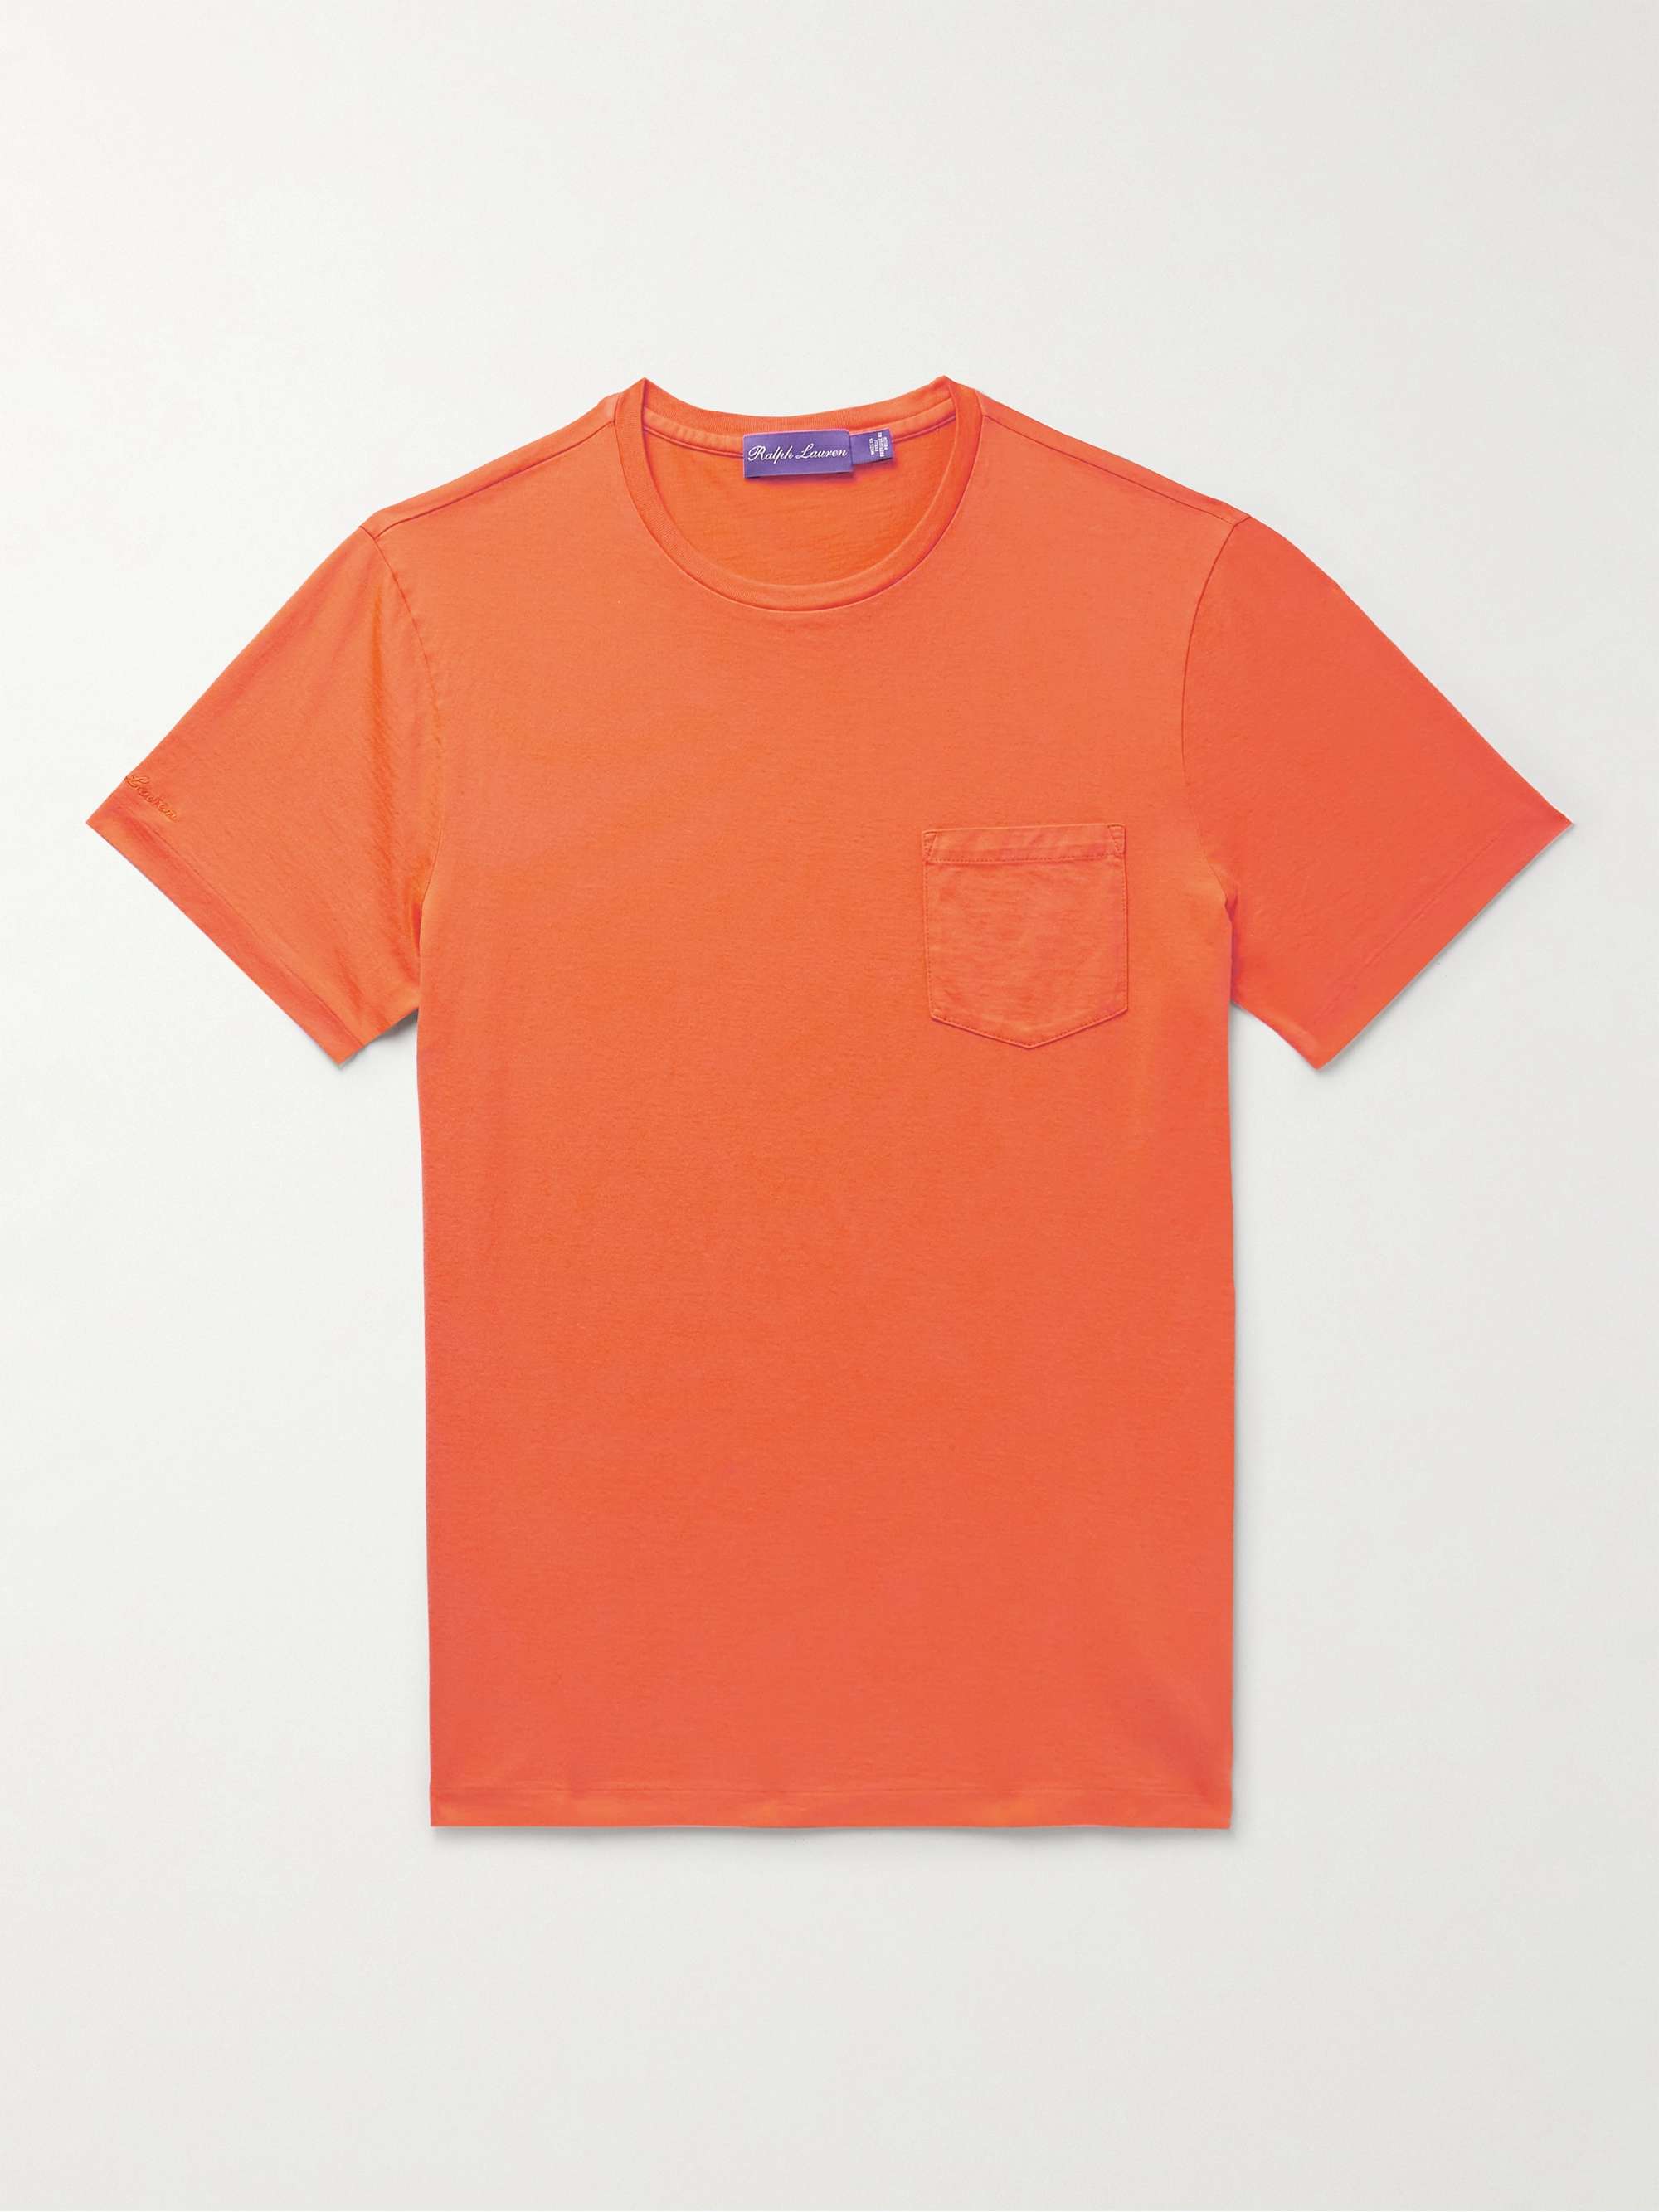 RALPH LAUREN PURPLE LABEL Cotton-Jersey T-Shirt | MR PORTER